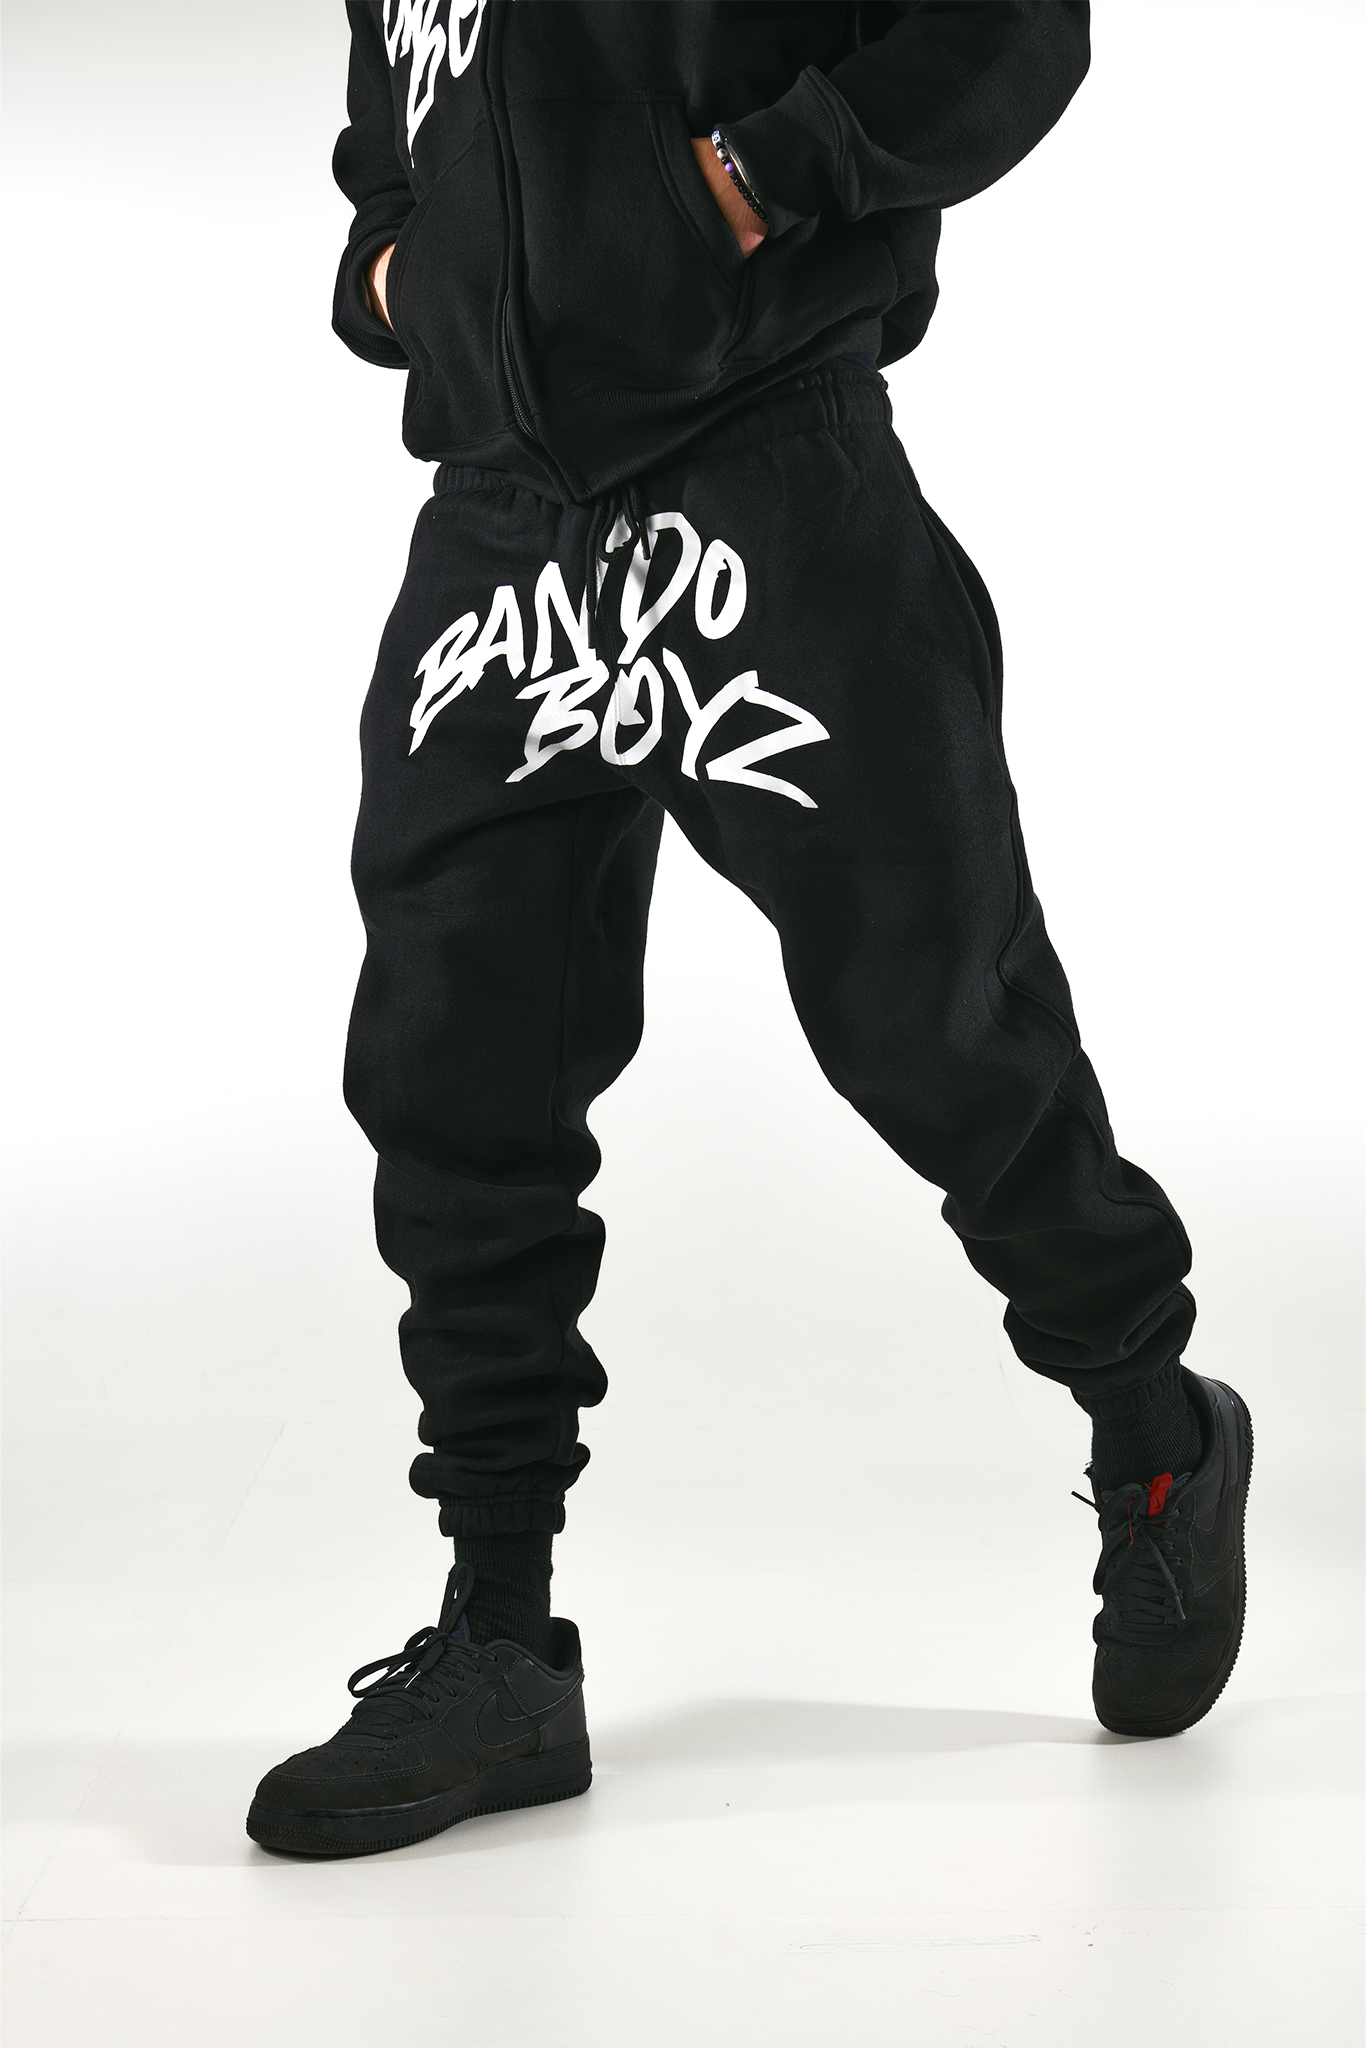 "Bando Boyz" Sweatpants